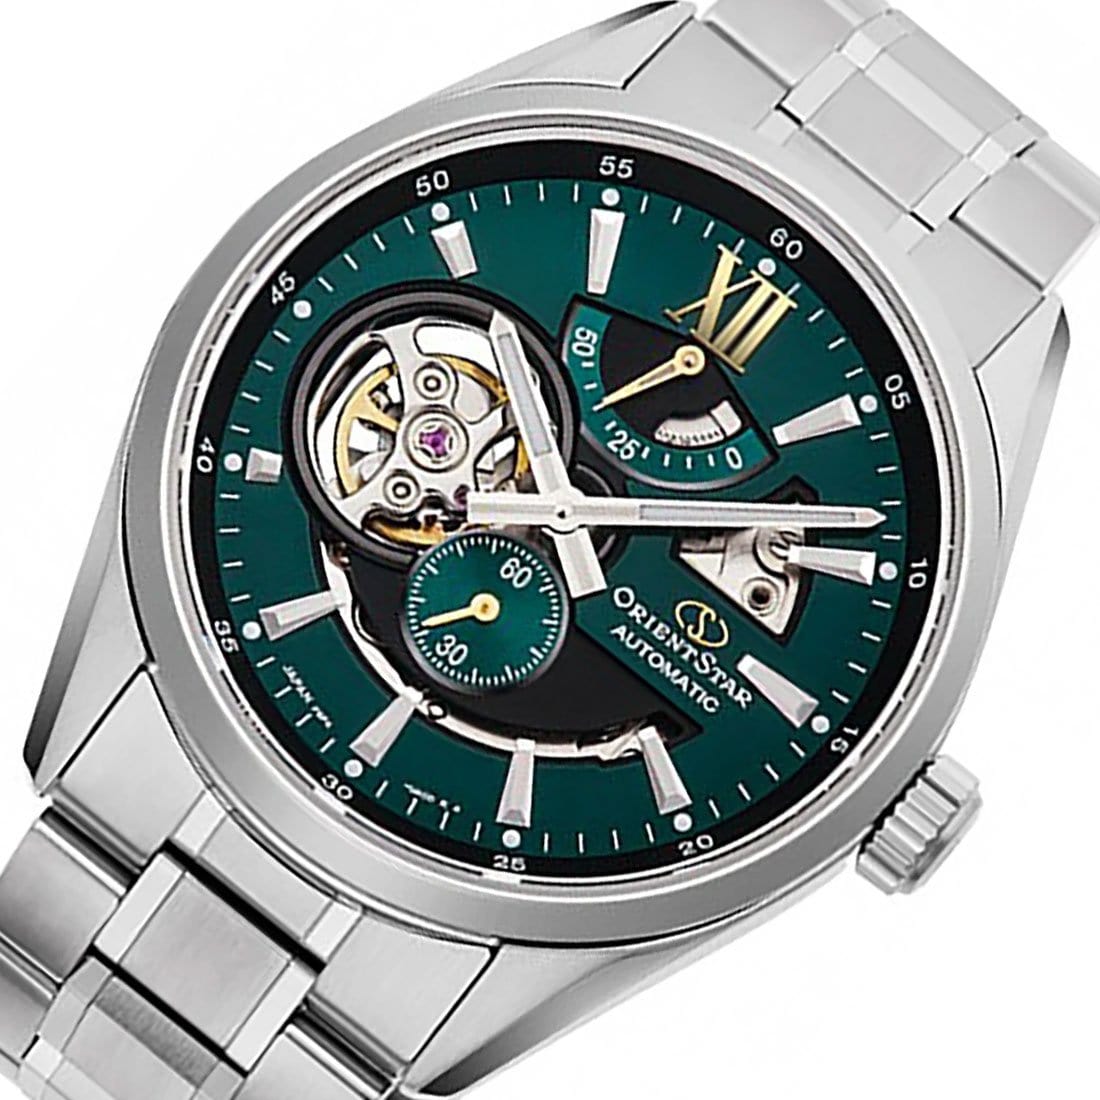 RE-AV0114E00B RE-AV0114E Orient Star Automatic Green Dial 24 Jewels Watch